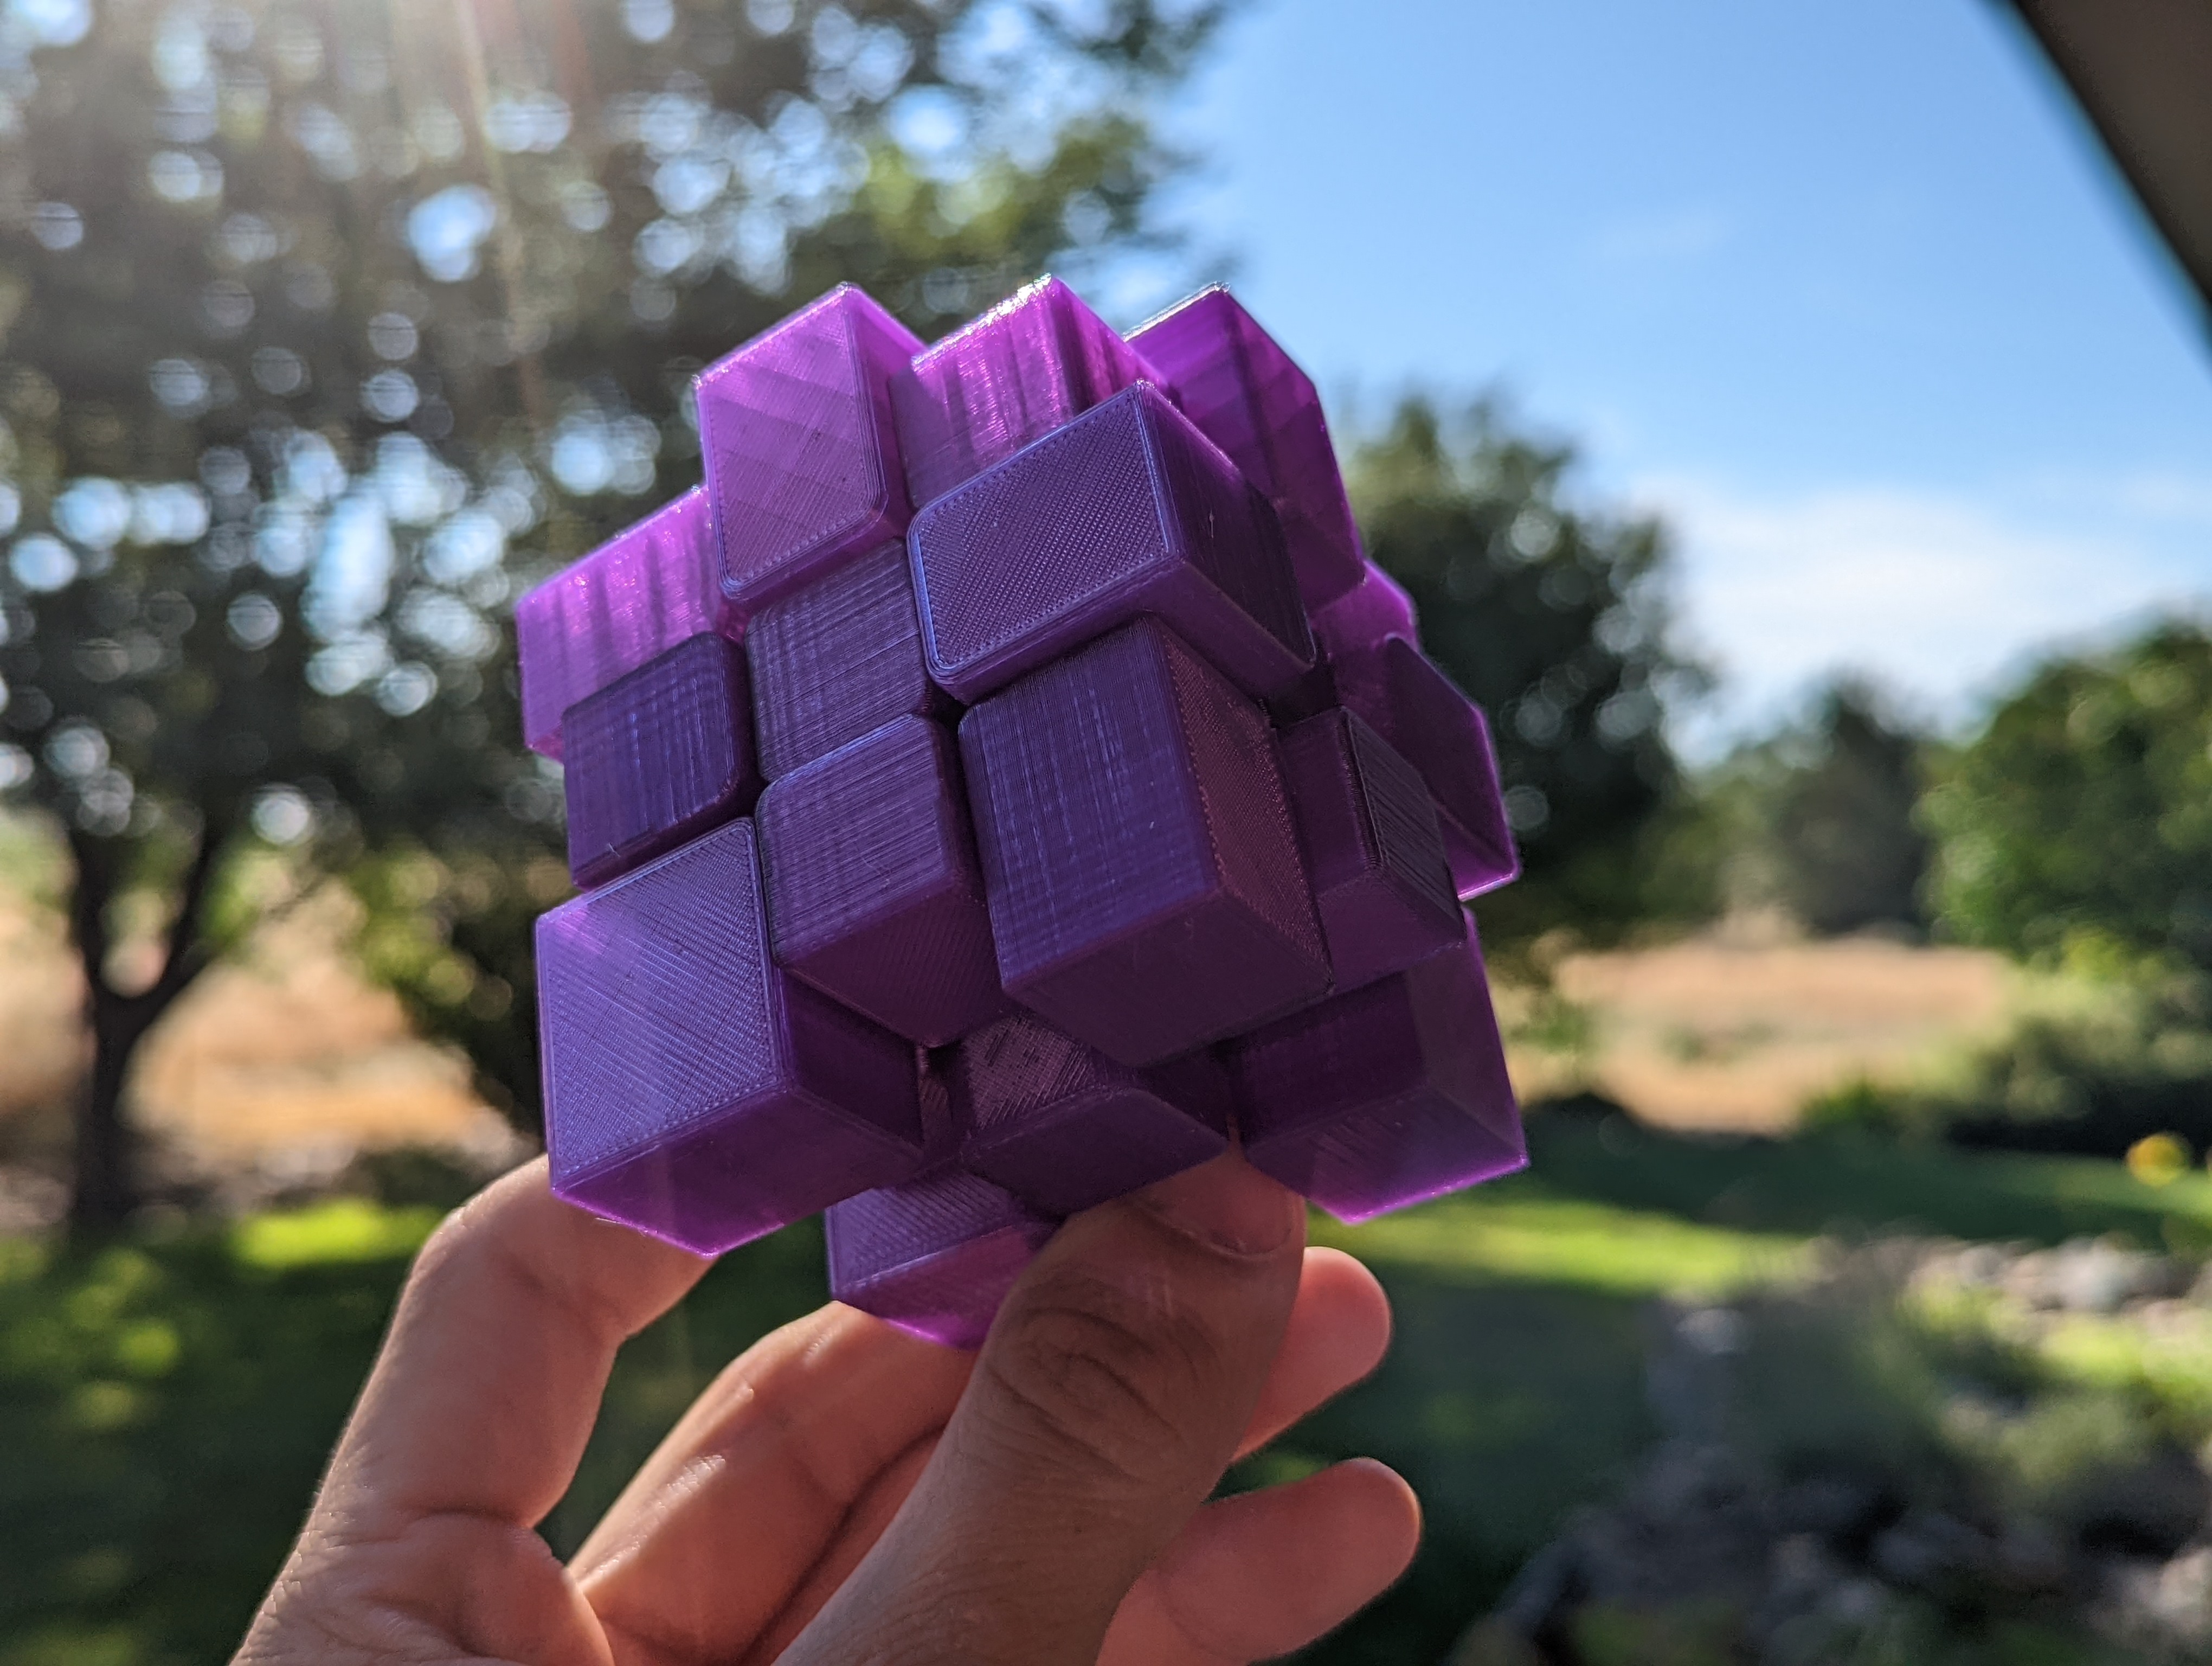 Bump Cube Remix of Rubik's Cube that is Maker Friendly